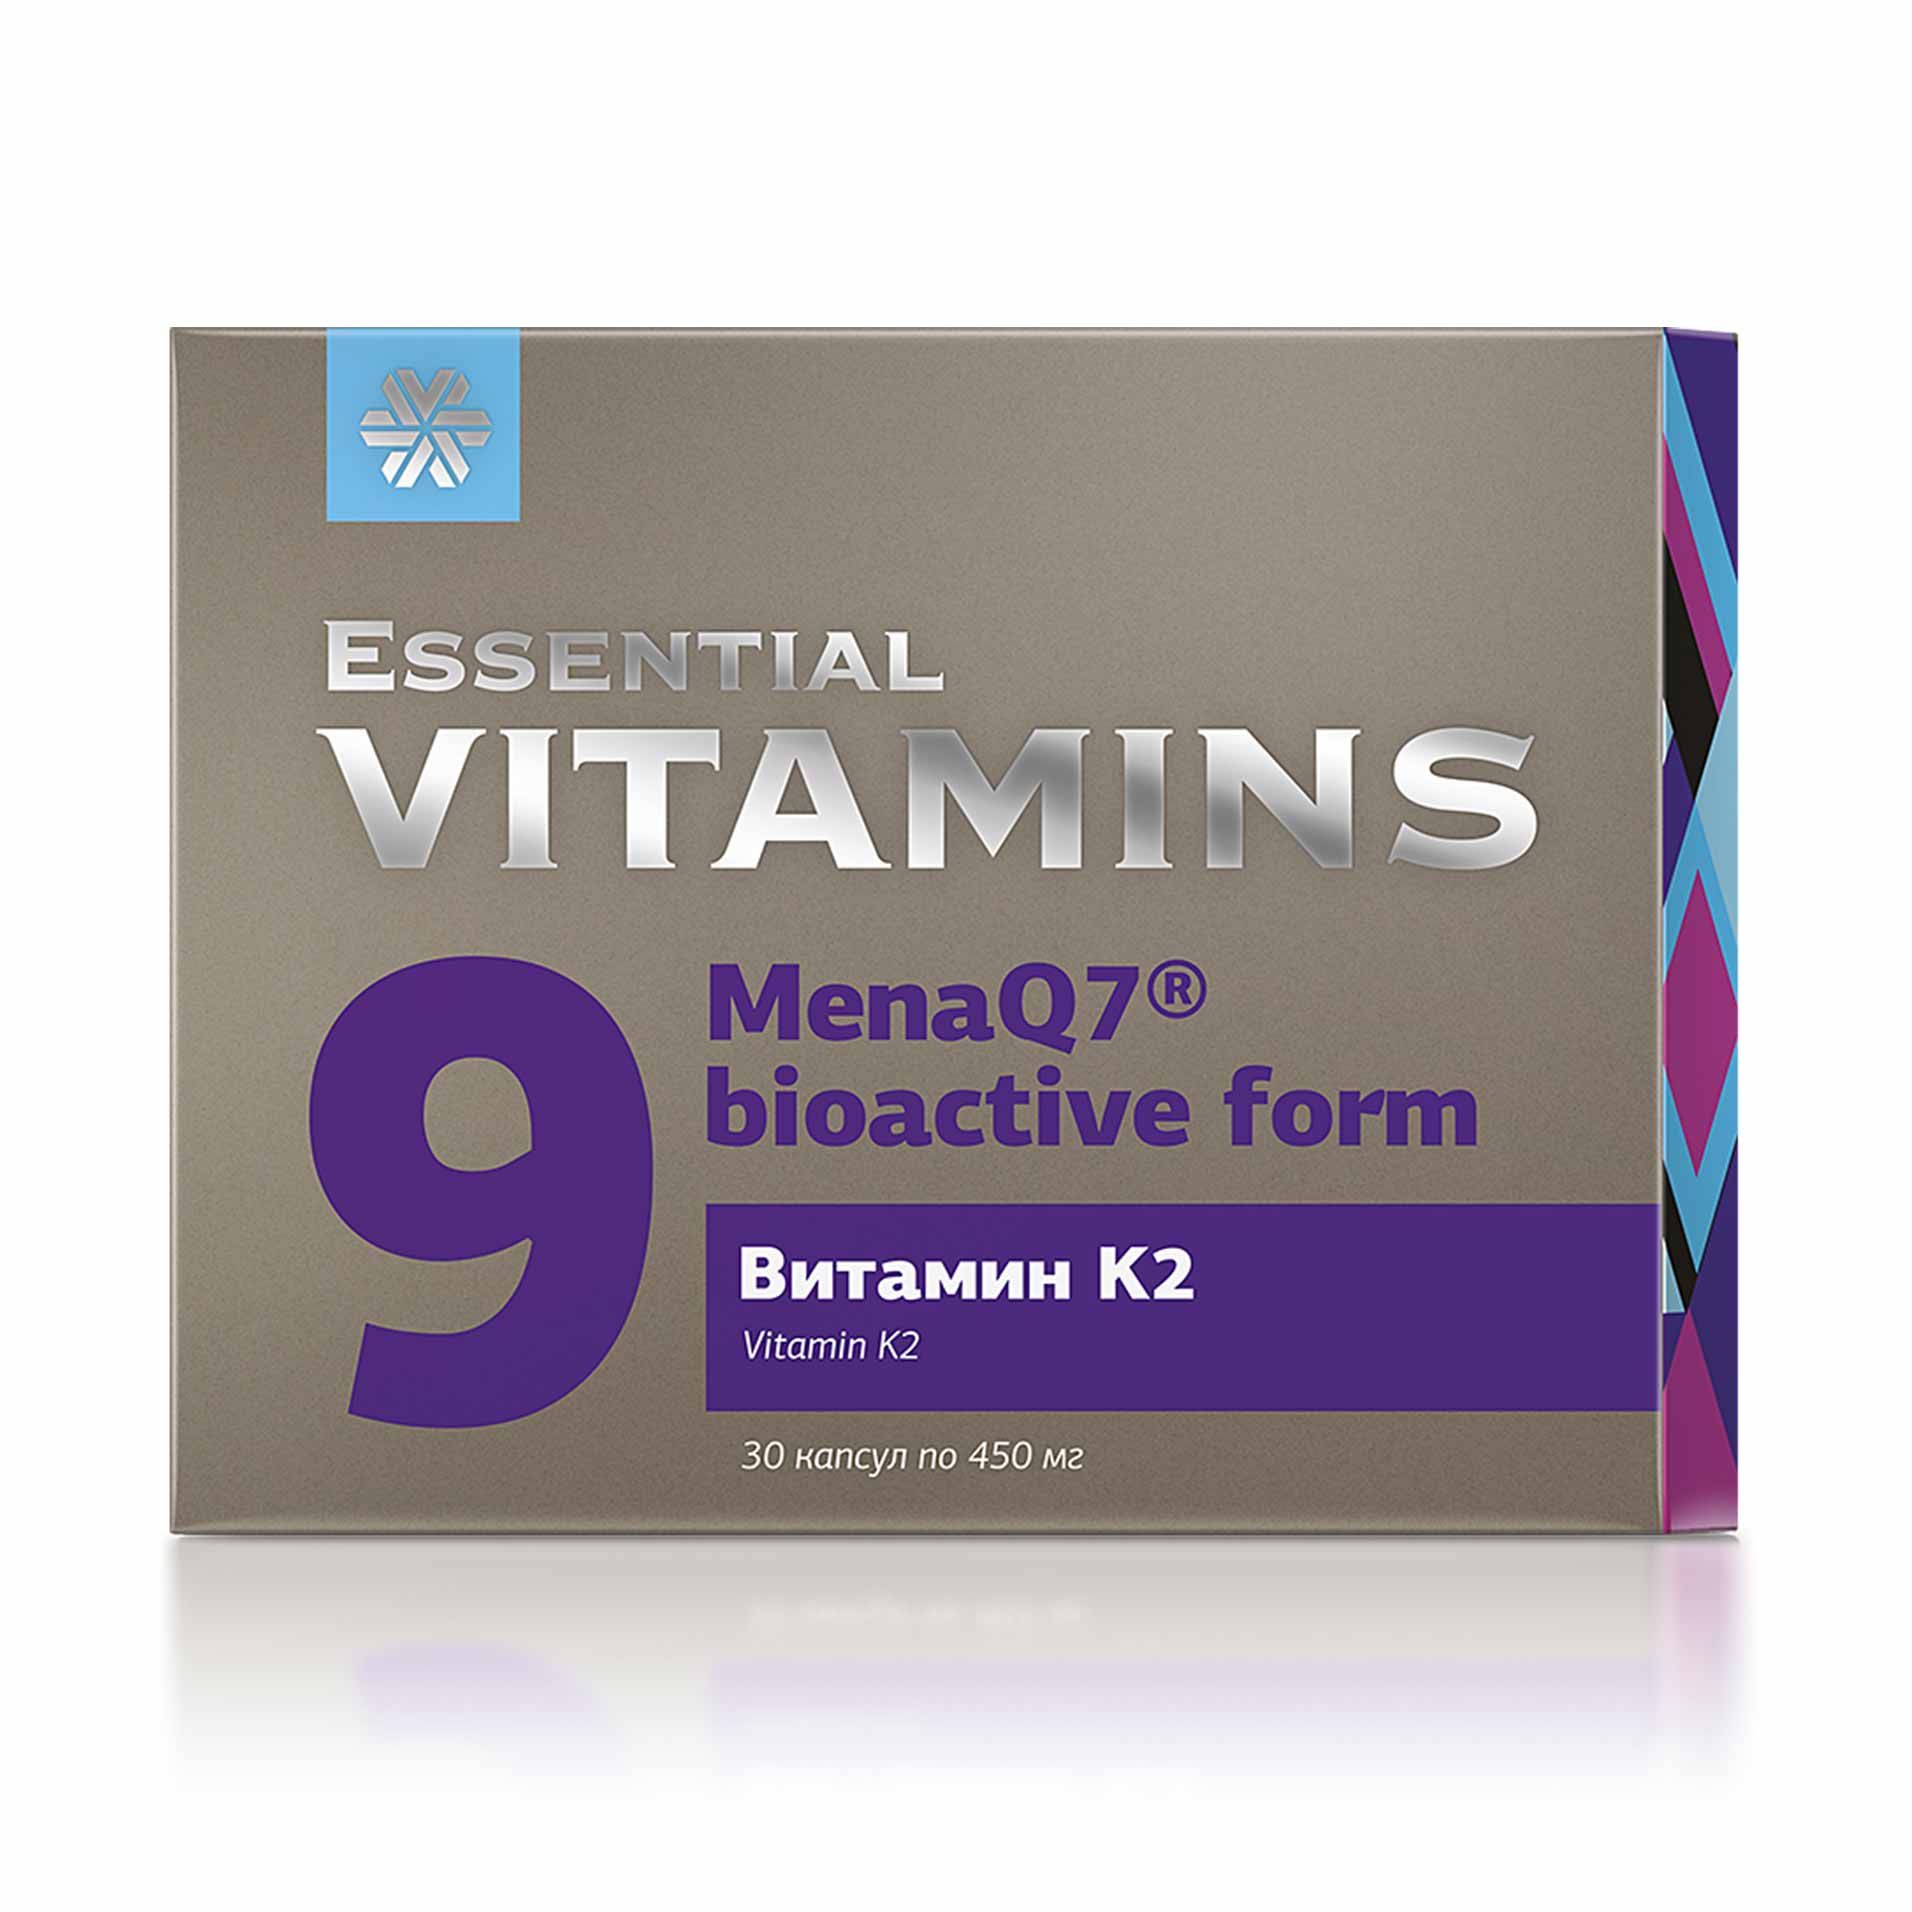 Essential Vitamins - Vitamin К2